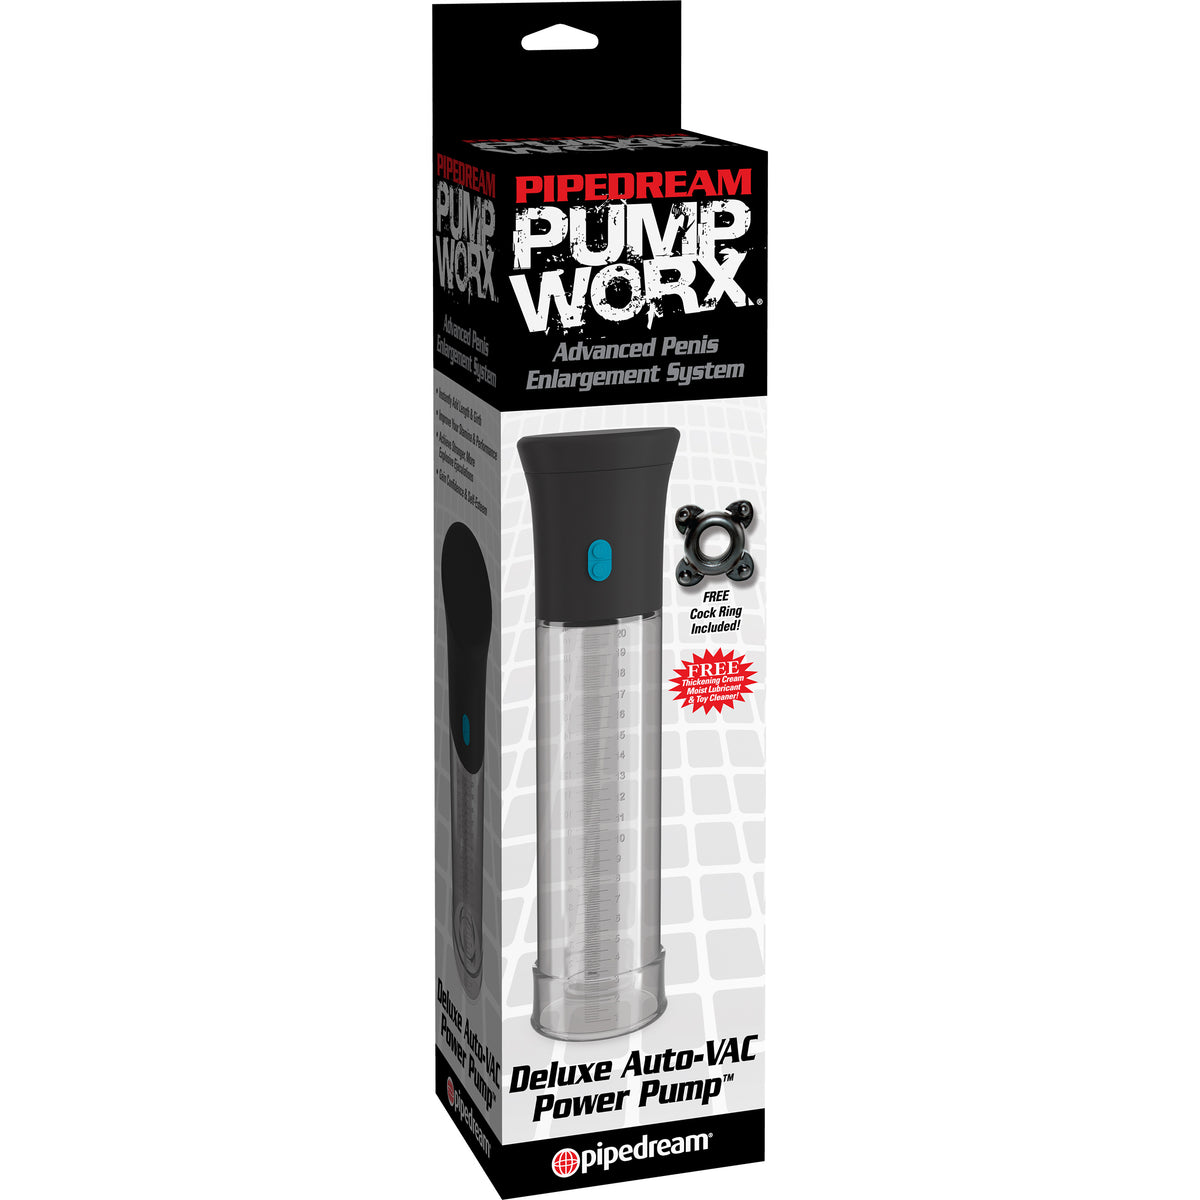 Pipedream - Pump Worx Deluxe Auto-VAC Power Pump